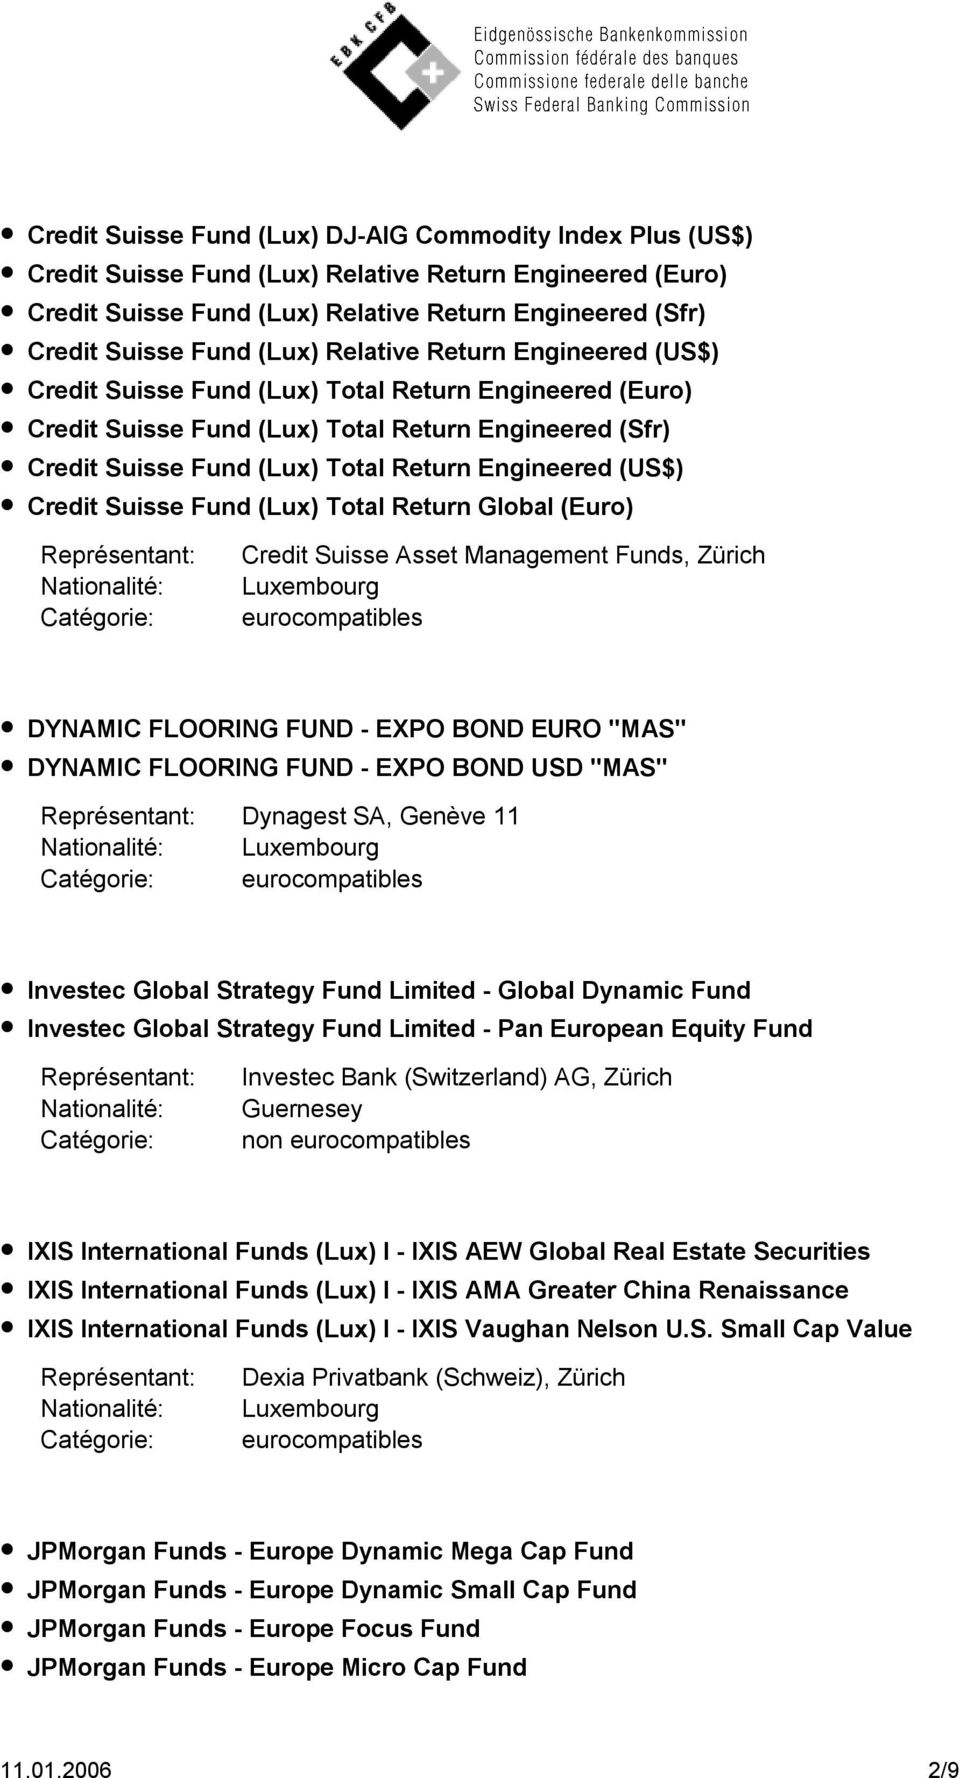 (US$) Credit Suisse Fund (Lux) Total Return Global (Euro) Credit Suisse Asset Management Funds, Zürich DYNAMIC FLOORING FUND - EXPO BOND EURO "MAS" DYNAMIC FLOORING FUND - EXPO BOND USD "MAS"